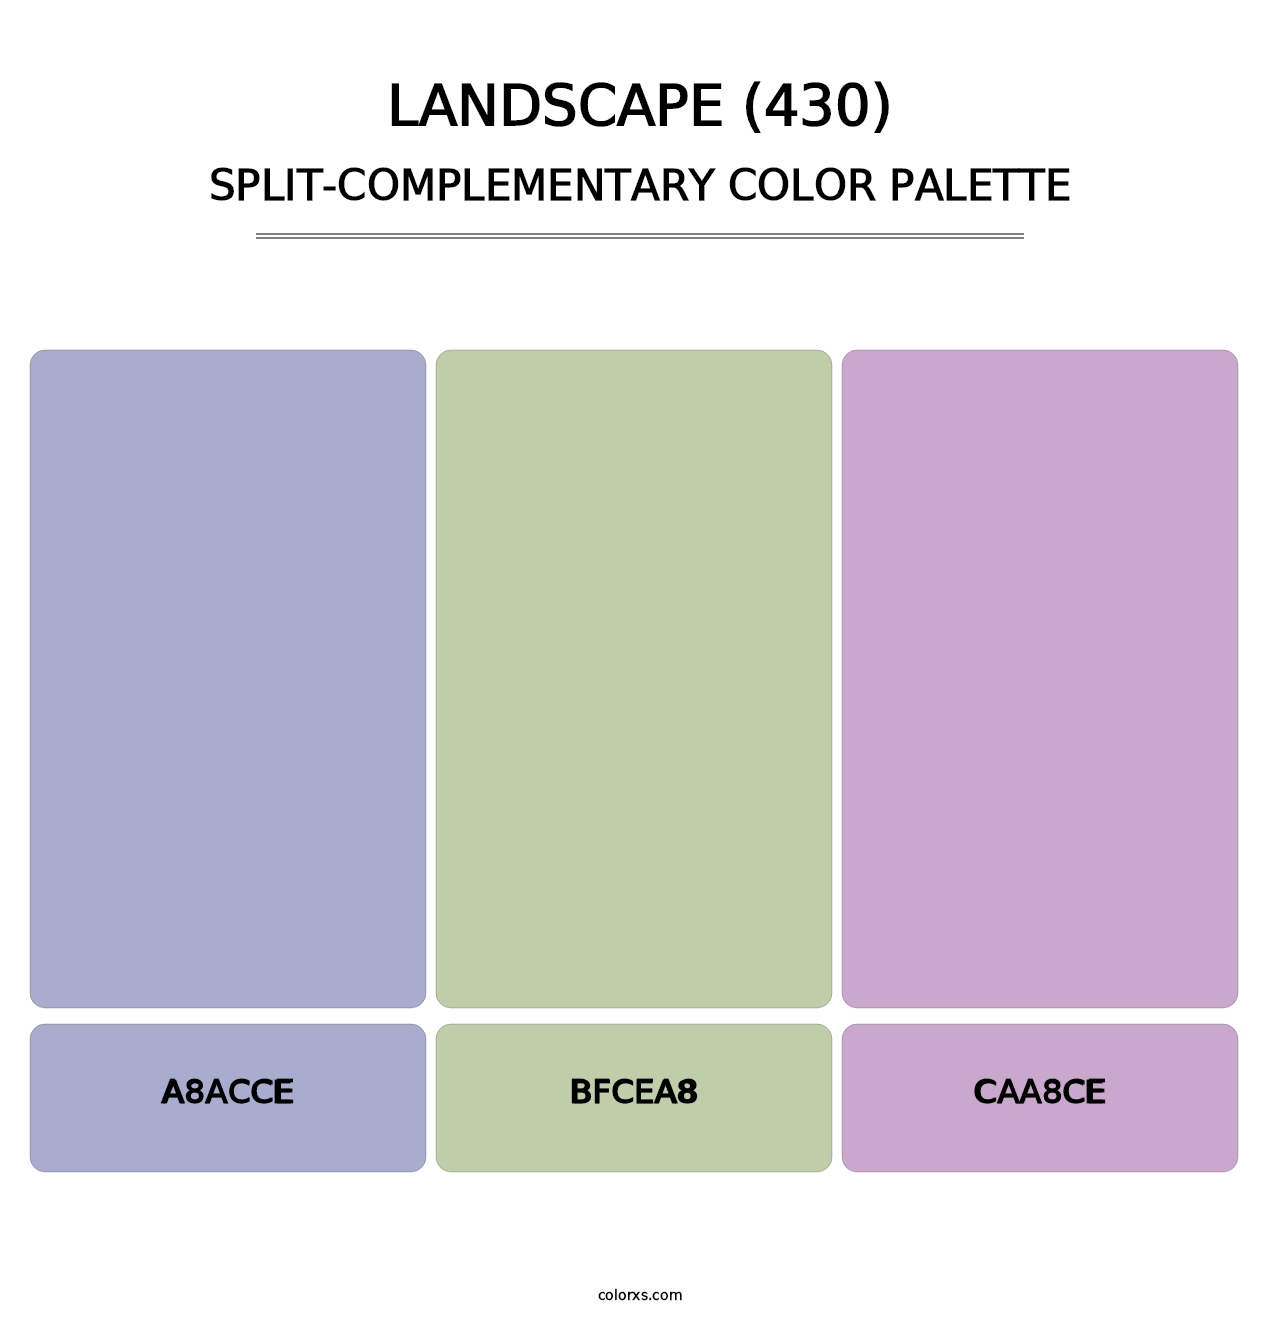 Landscape (430) - Split-Complementary Color Palette